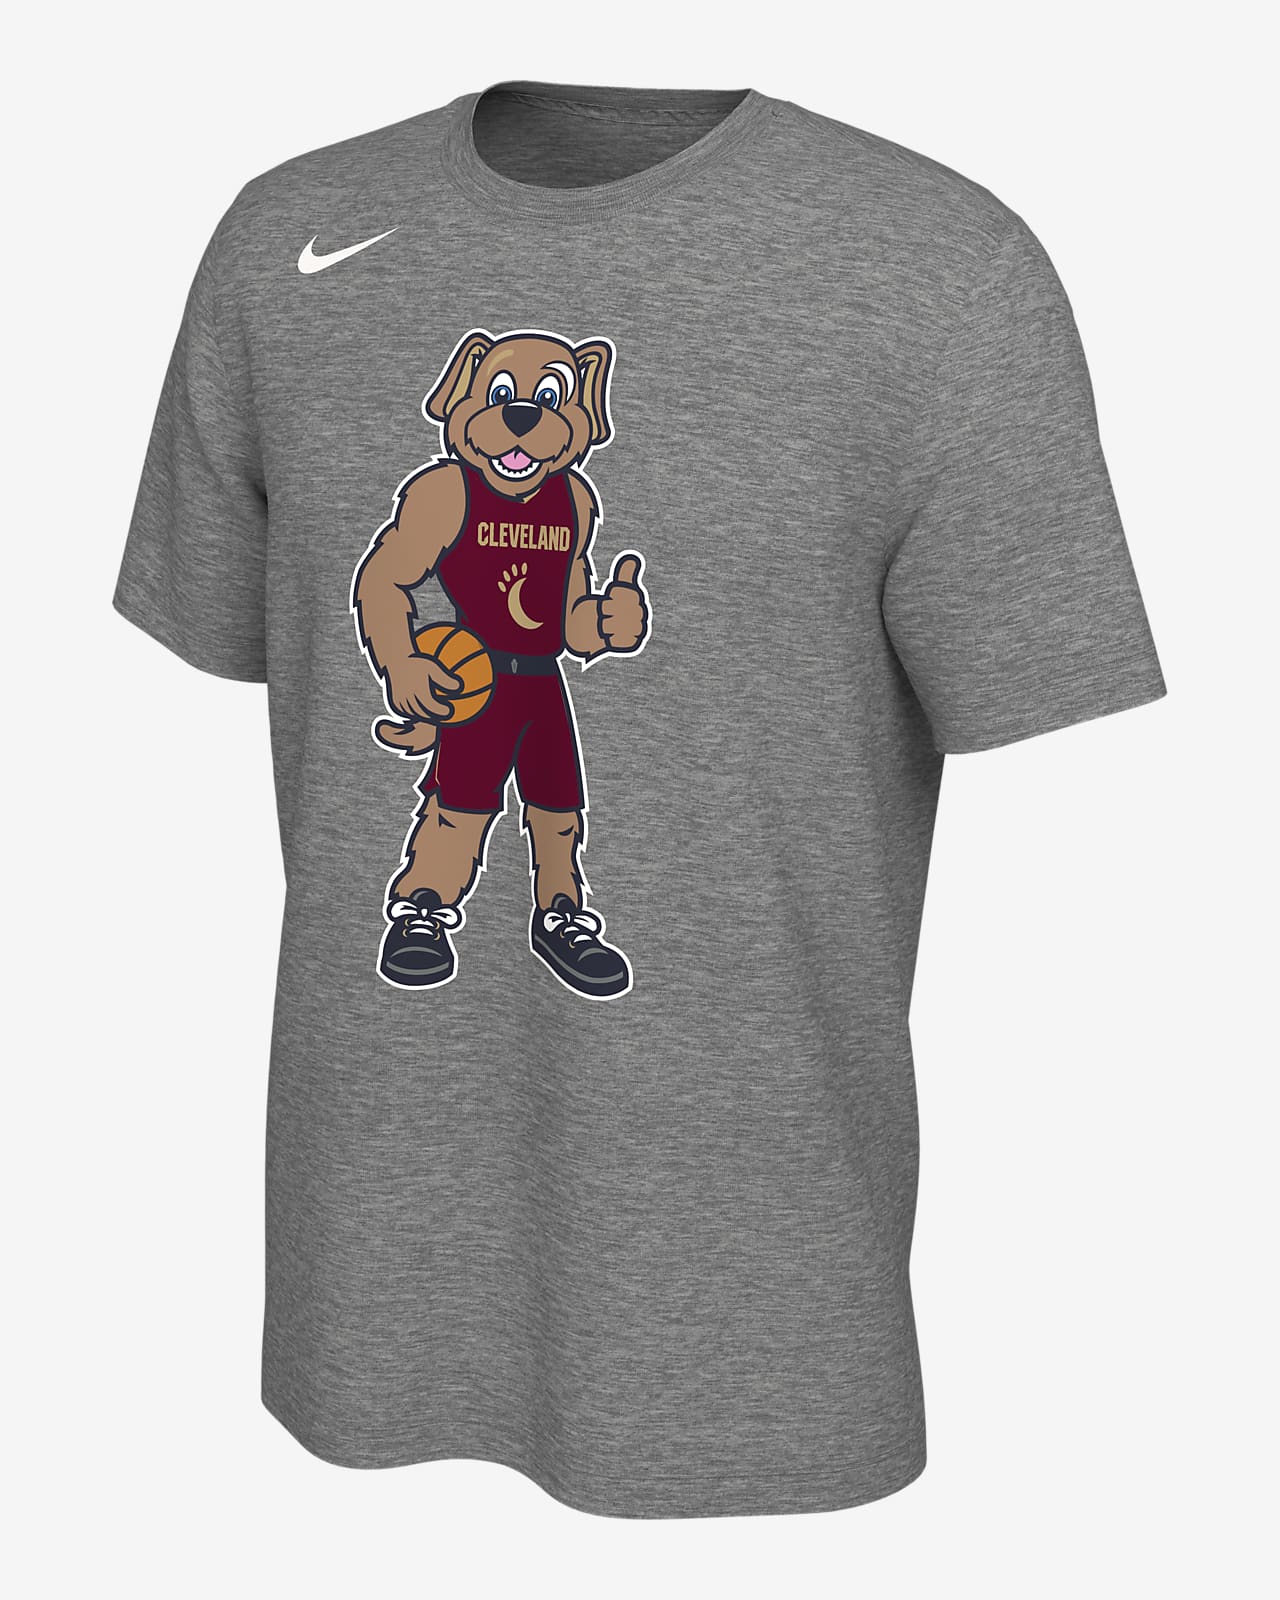 Cleveland Cavaliers Men's Nike NBA T-Shirt